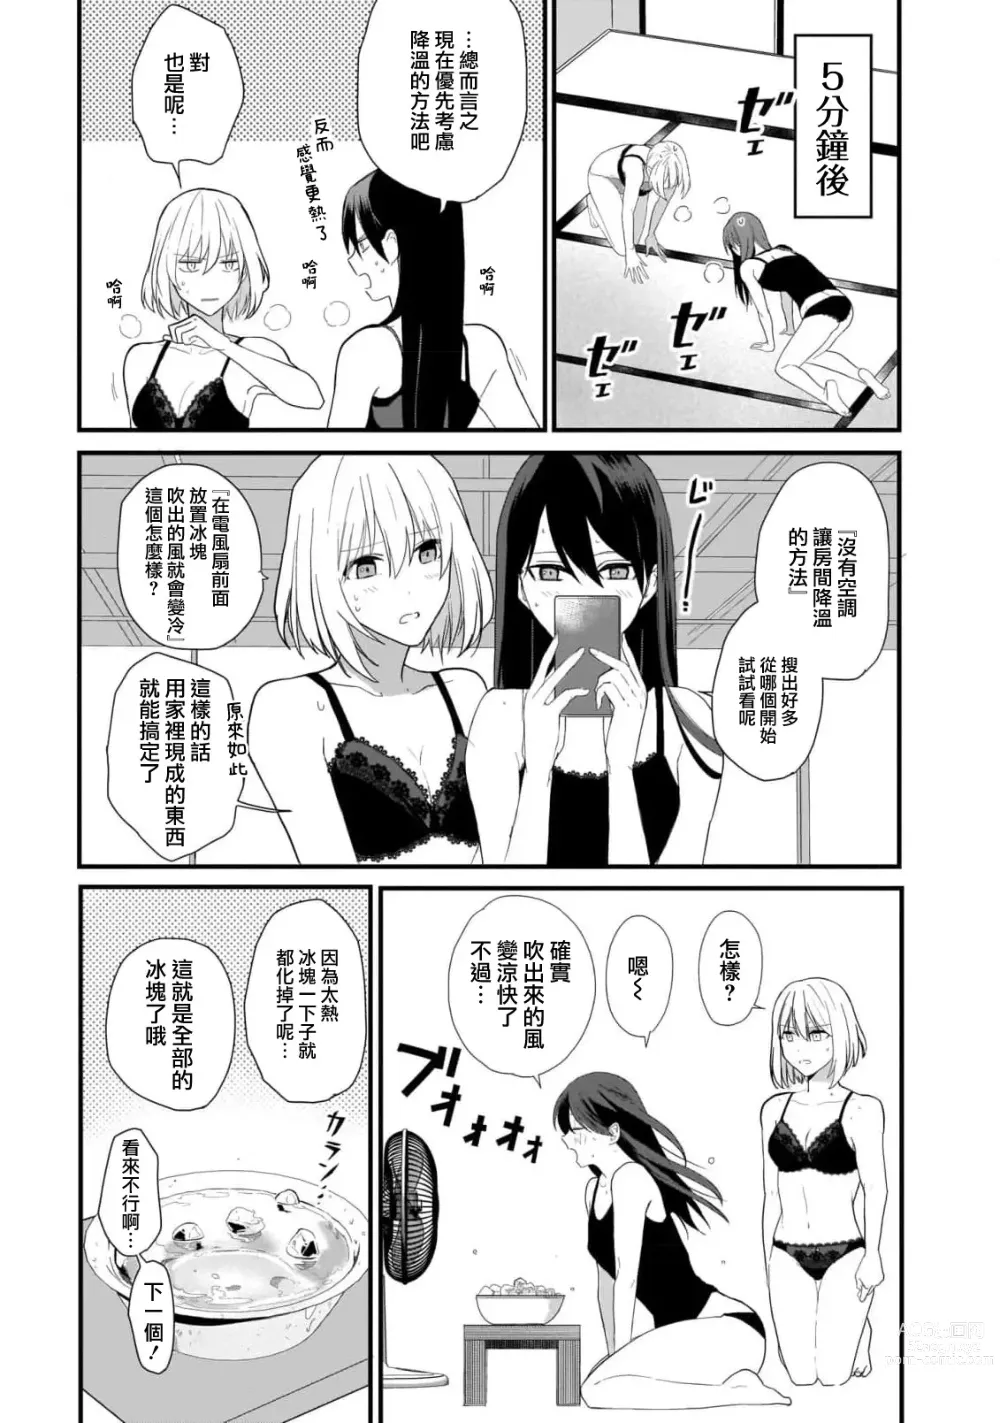 Page 4 of manga 冷却运动